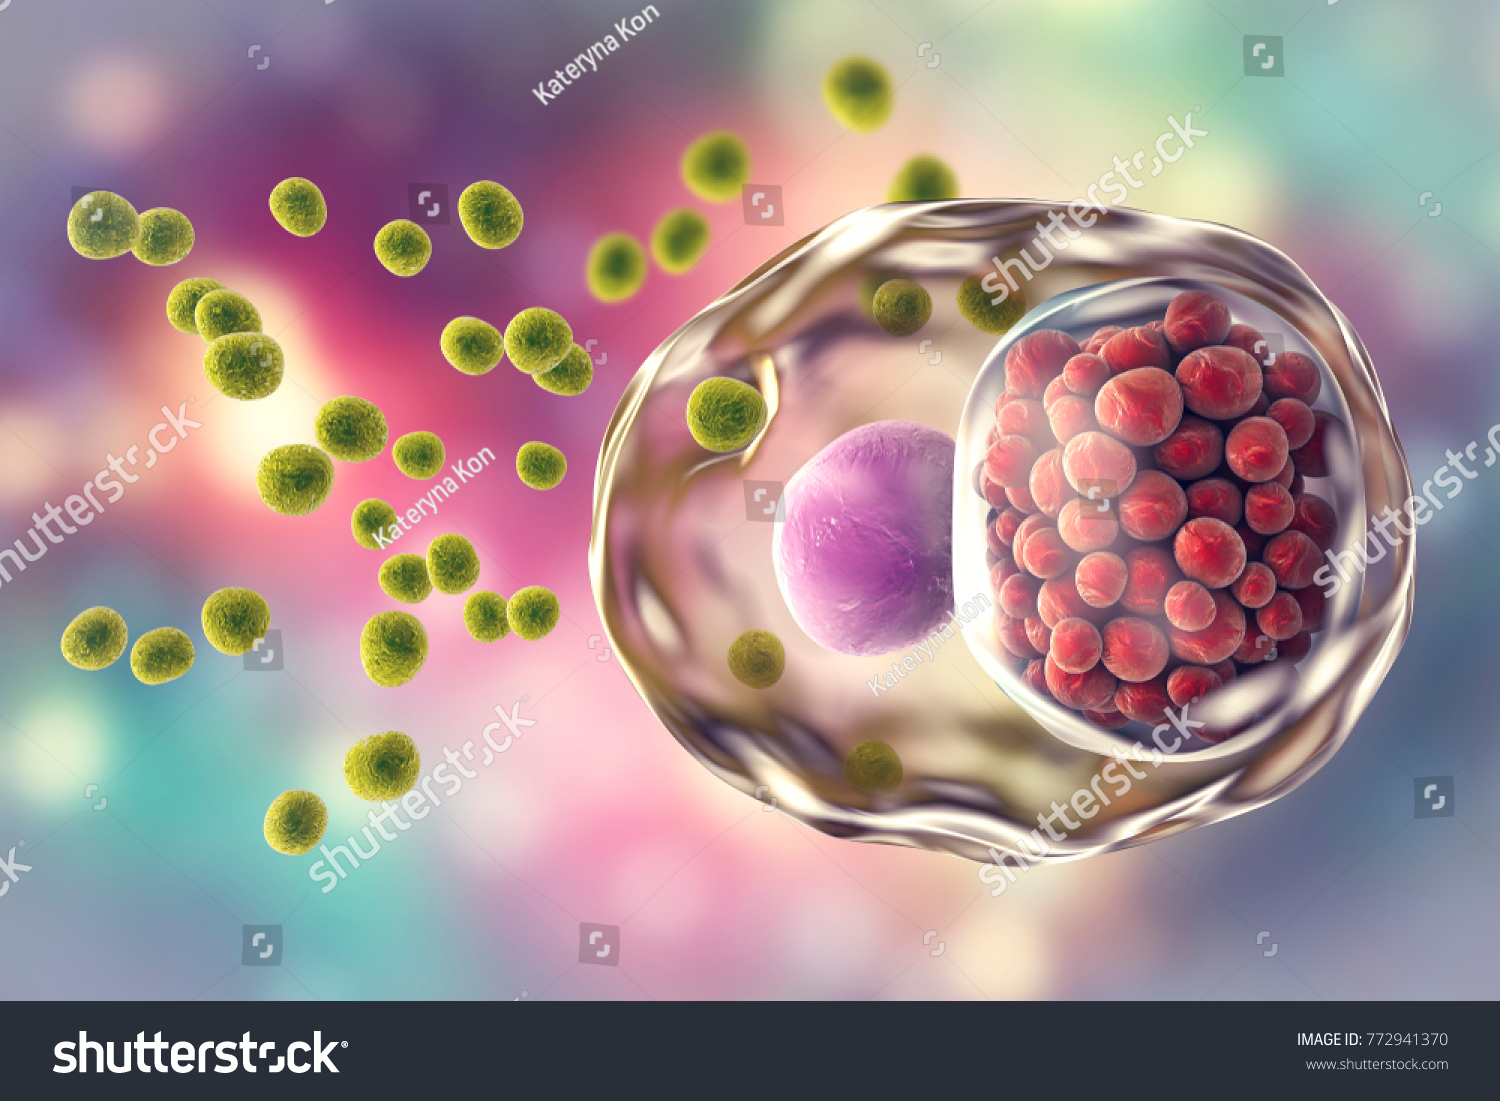 Chlamydia Trachomatis Bacteria 3d Illustration Showing Stock Illustration 772941370 Shutterstock 8647